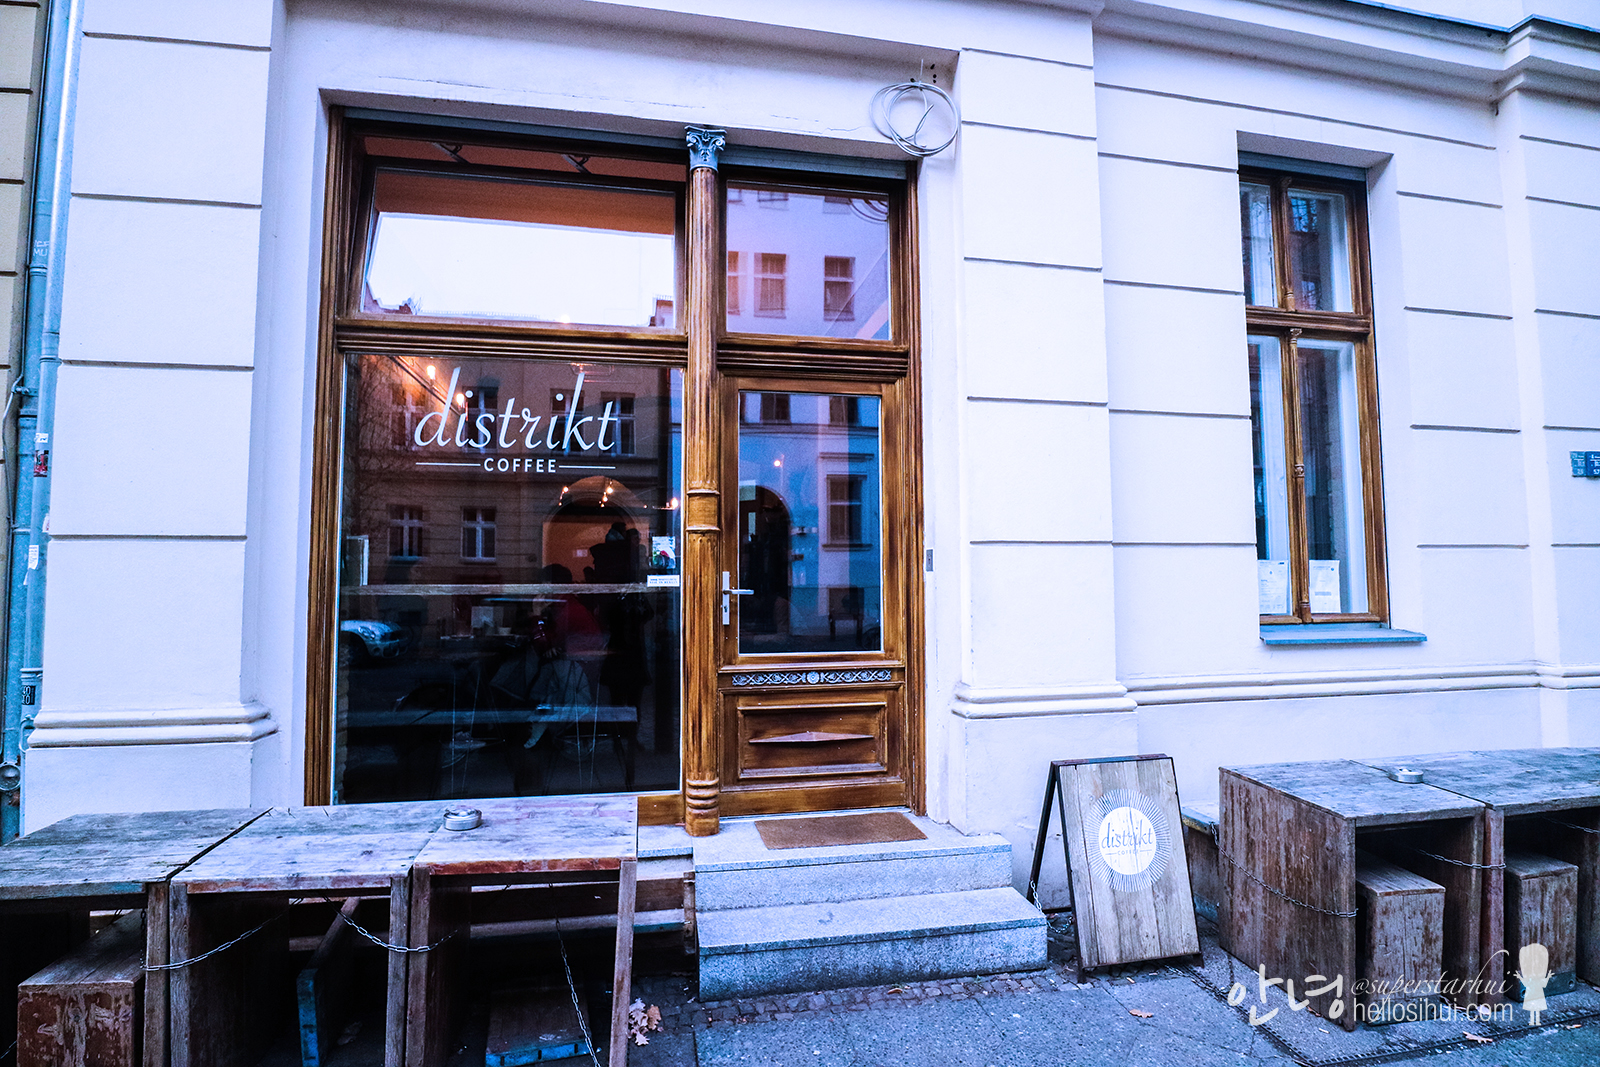 Europe 2018/2019 Day 2: Berlin – Distrikt Coffee